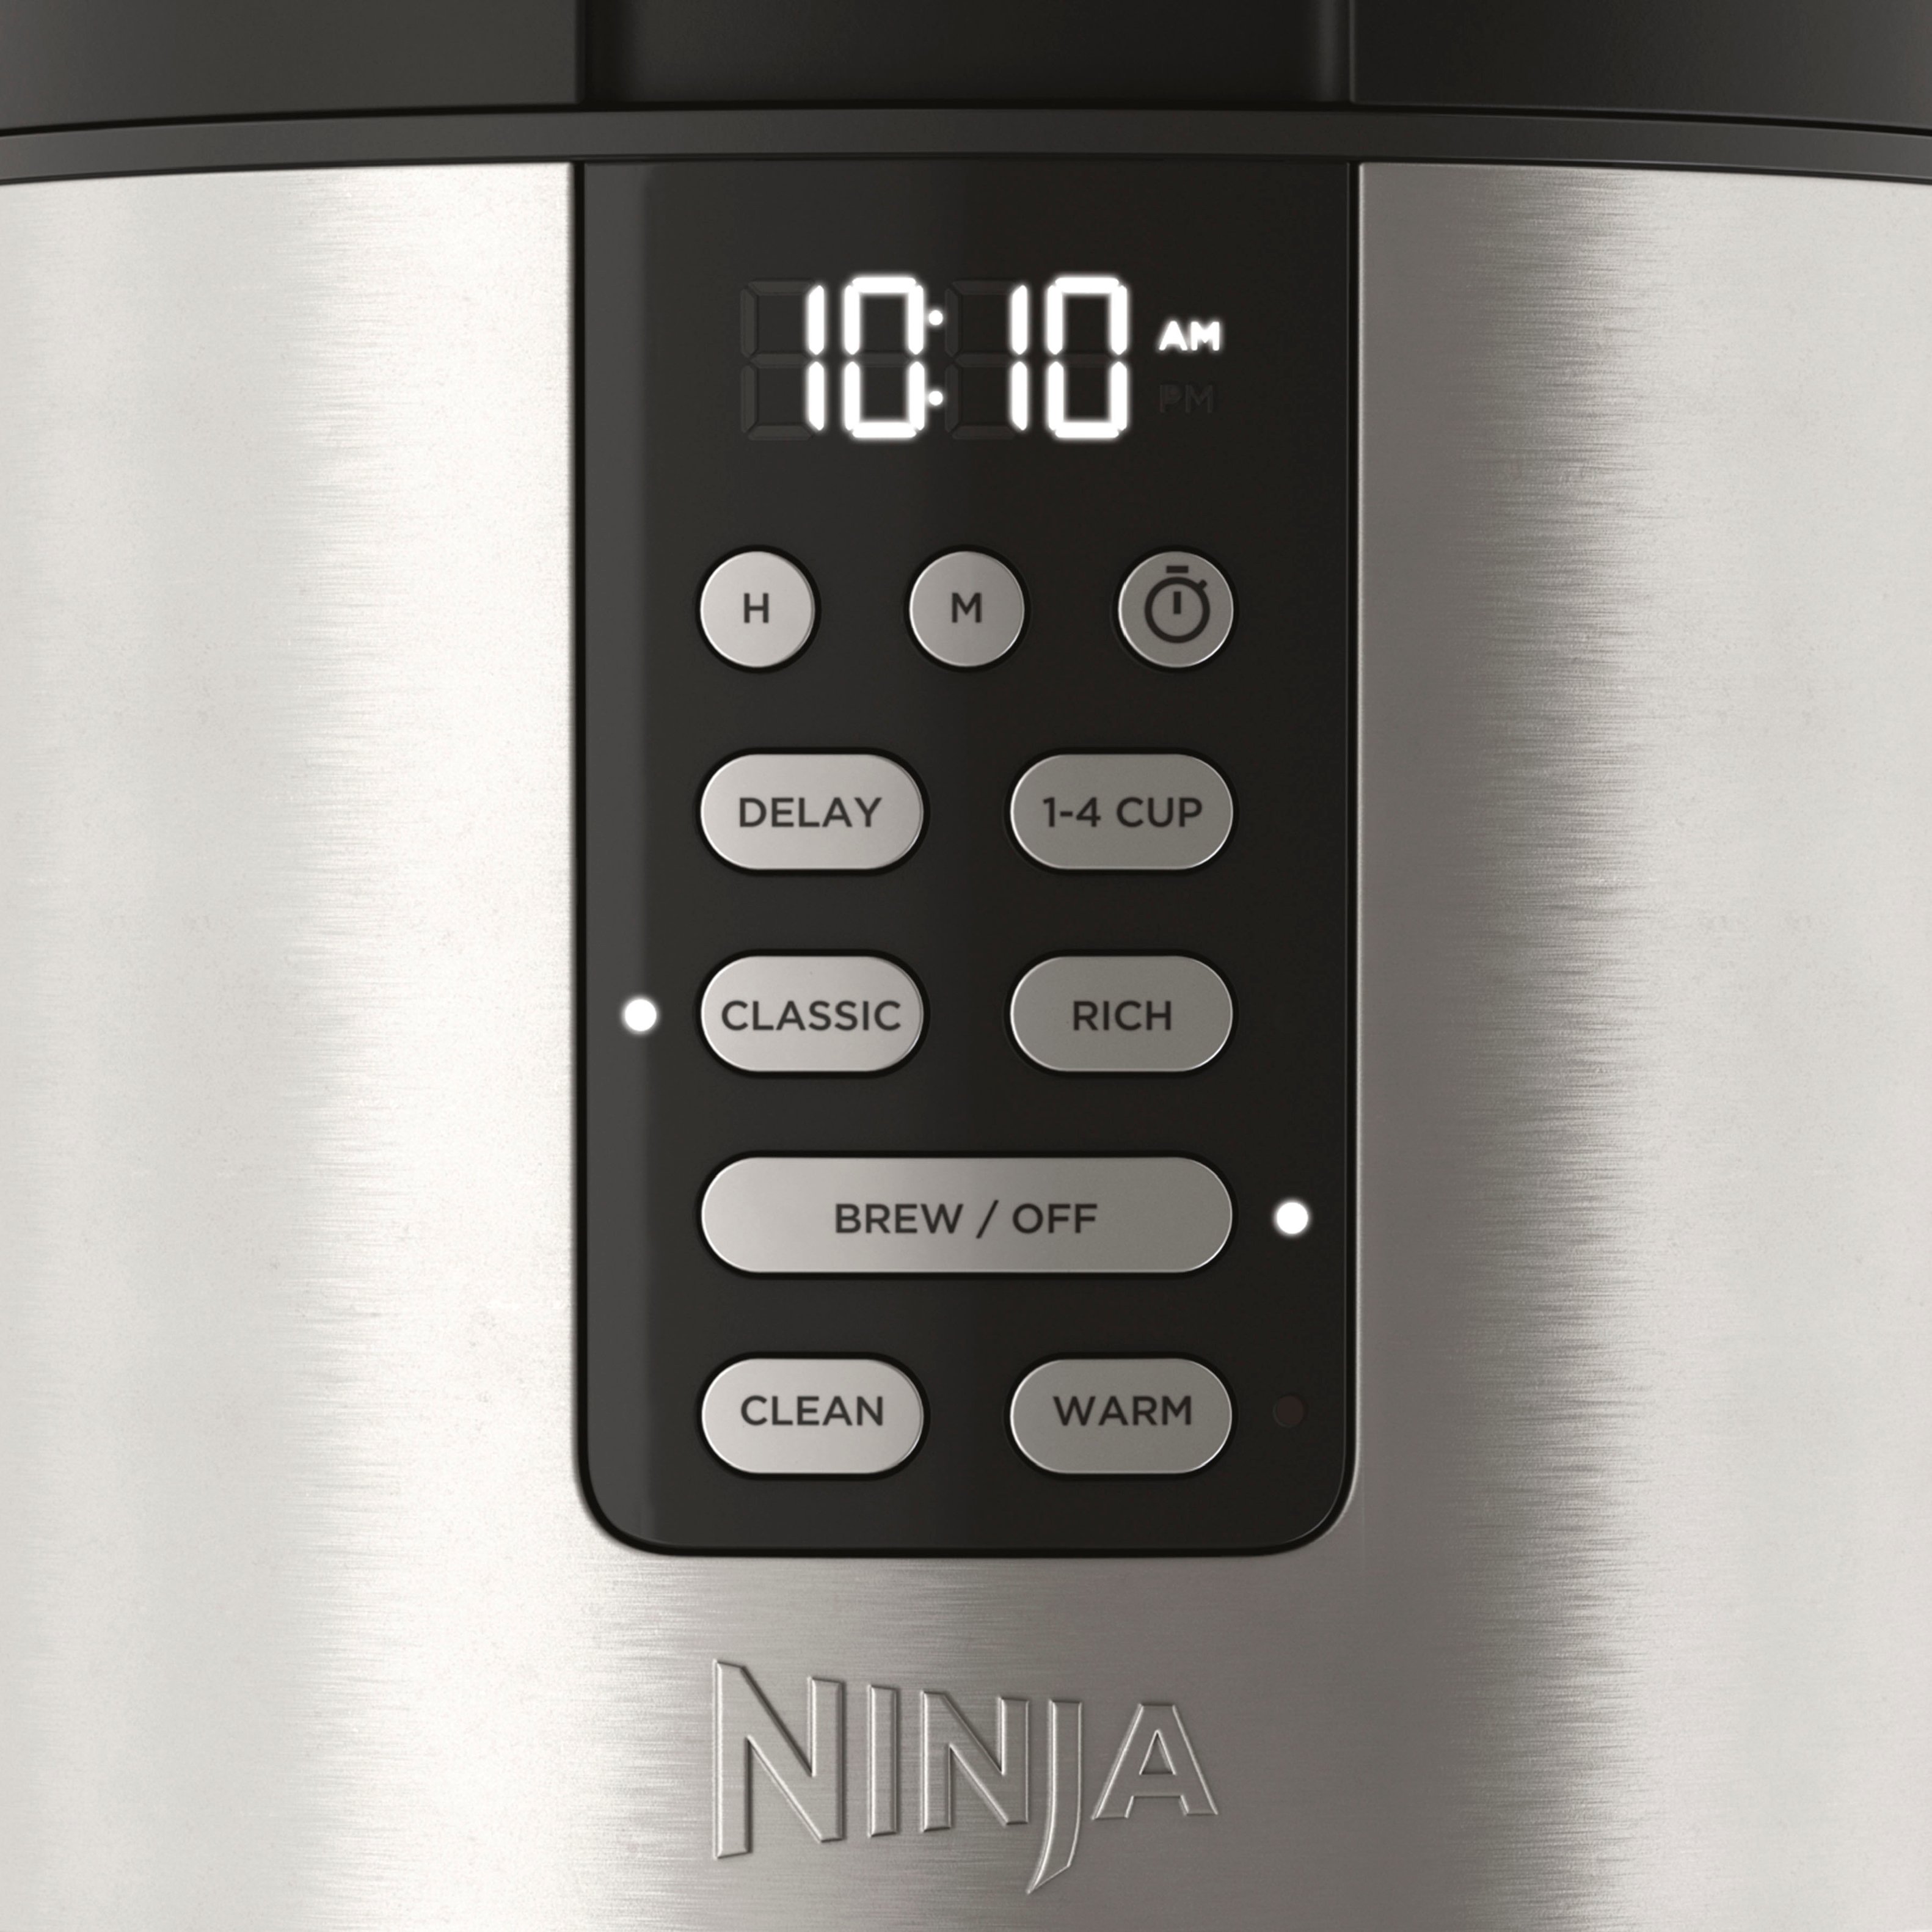 Ninja Programmable XL 14 Cup Coffee Maker Pro DCM201